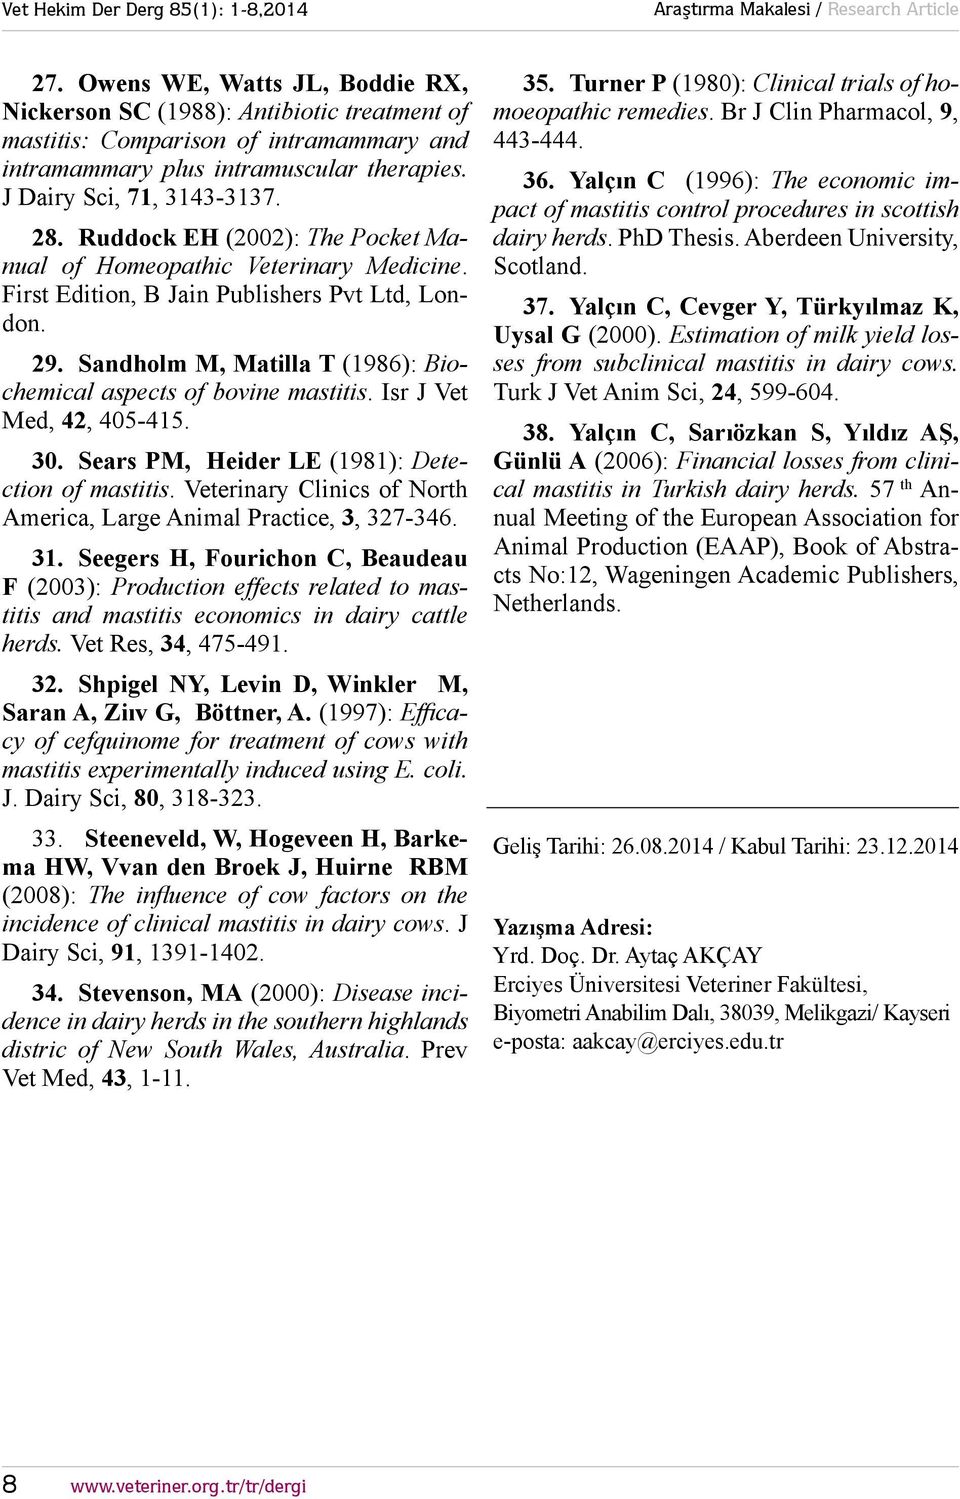 Isr J Vet Med, 42, 405-415. 30. Sears PM, Heider LE (1981): Detection of mastitis. Veterinary Clinics of North America, Large Animal Practice, 3, 327-346. 31.